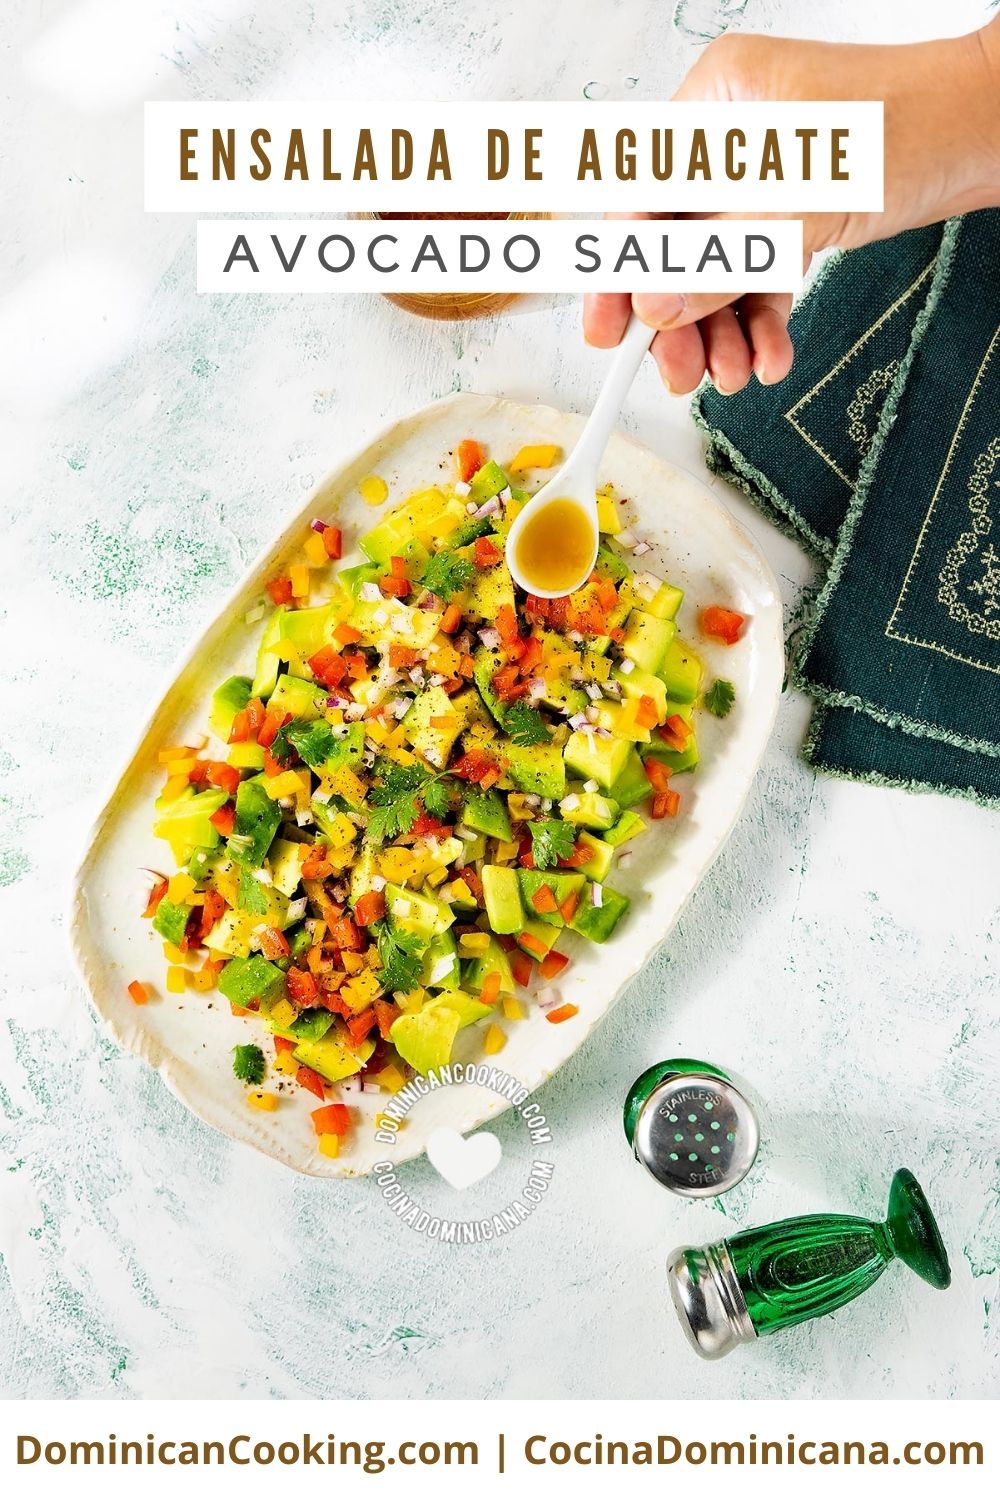 Ensalada de aguacate (avocado salad) recipe.